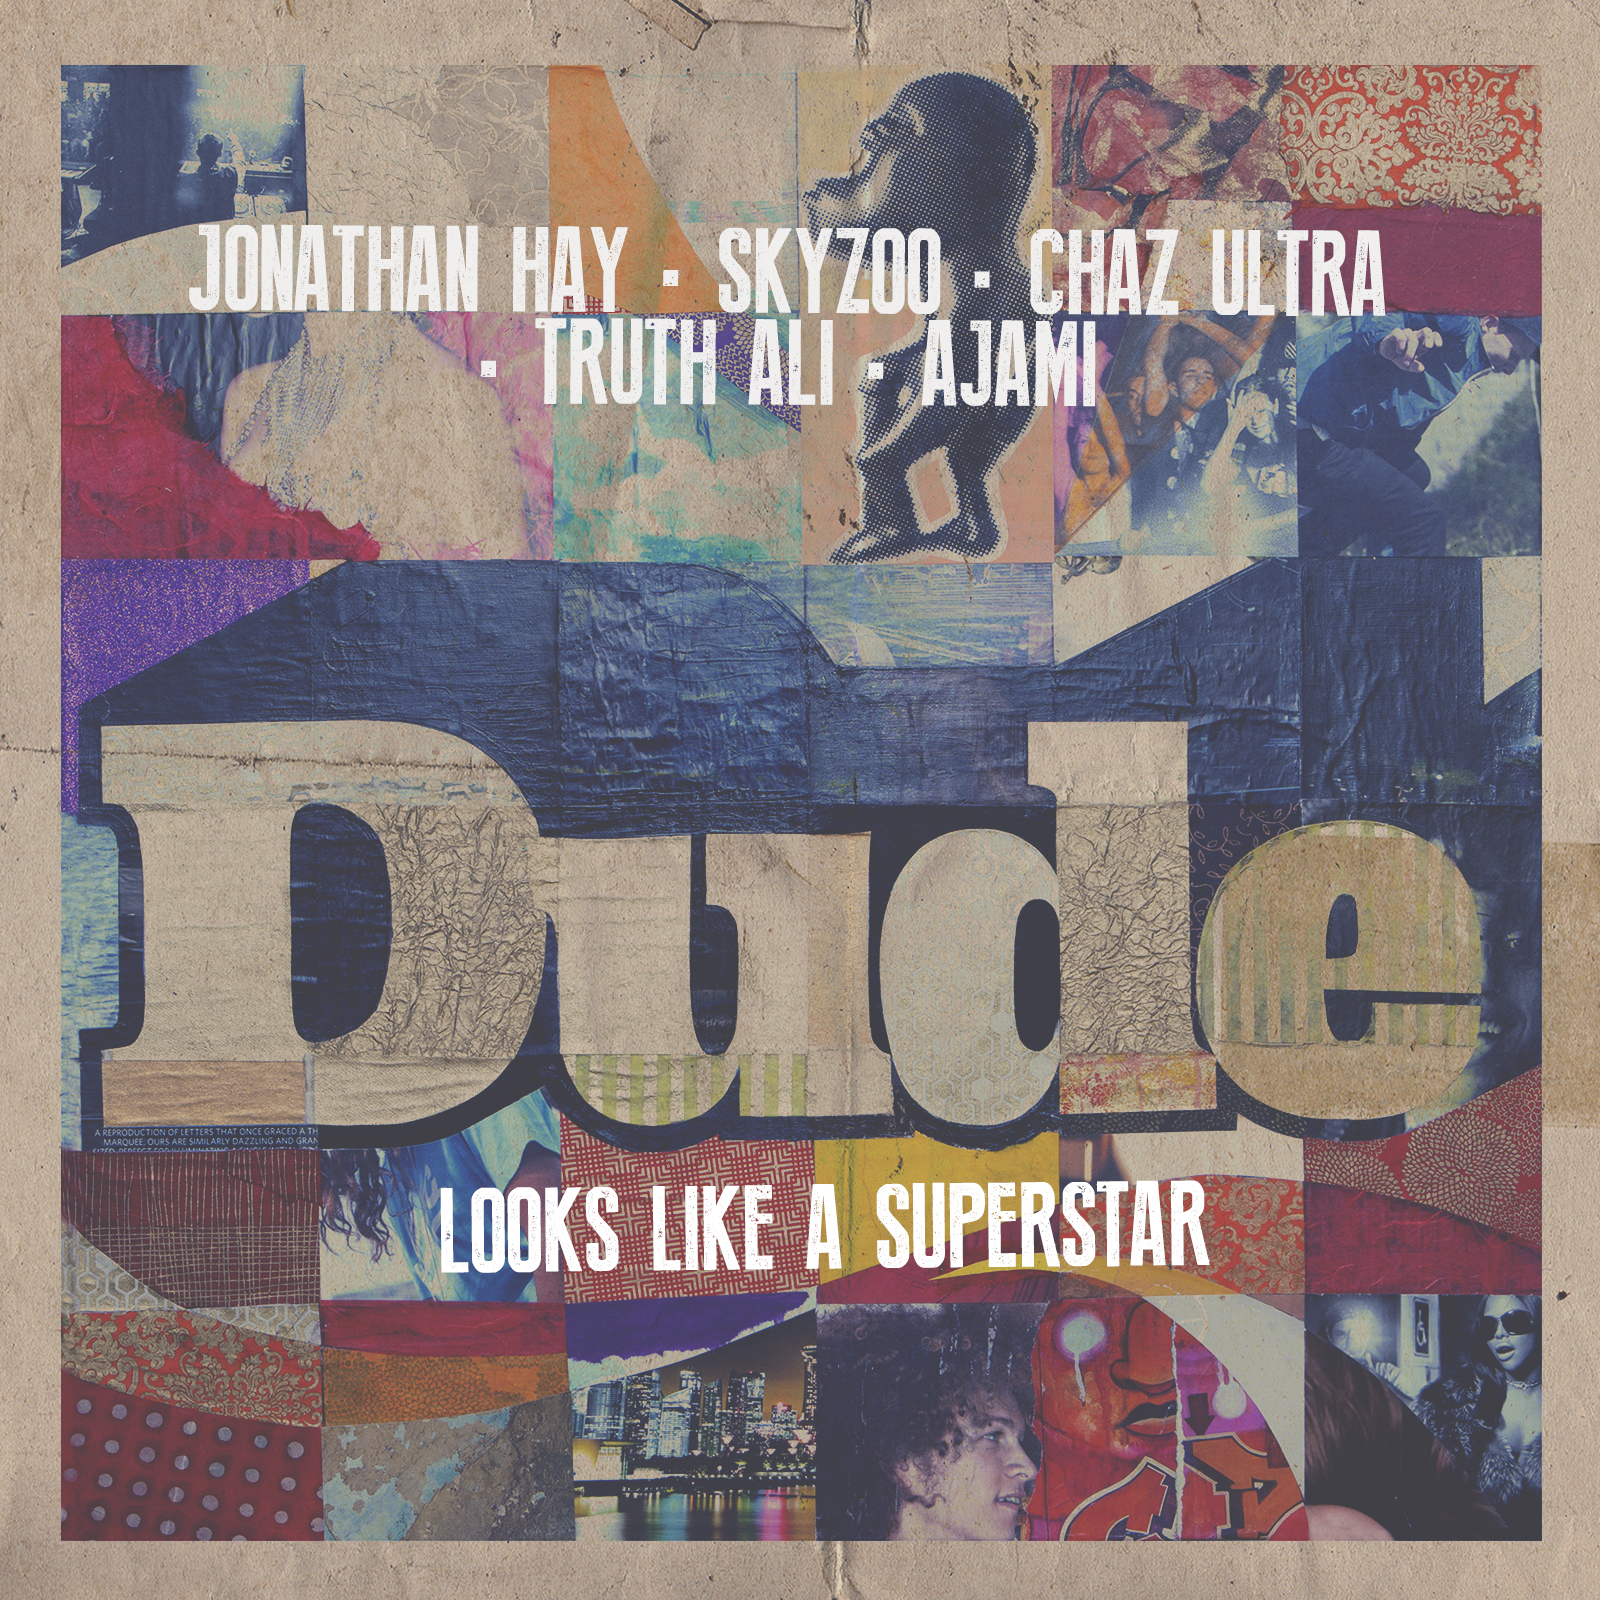 Dude Looks Like A Superstar (Cey Adams x Jonathan Hay for Urban Hitchcock)